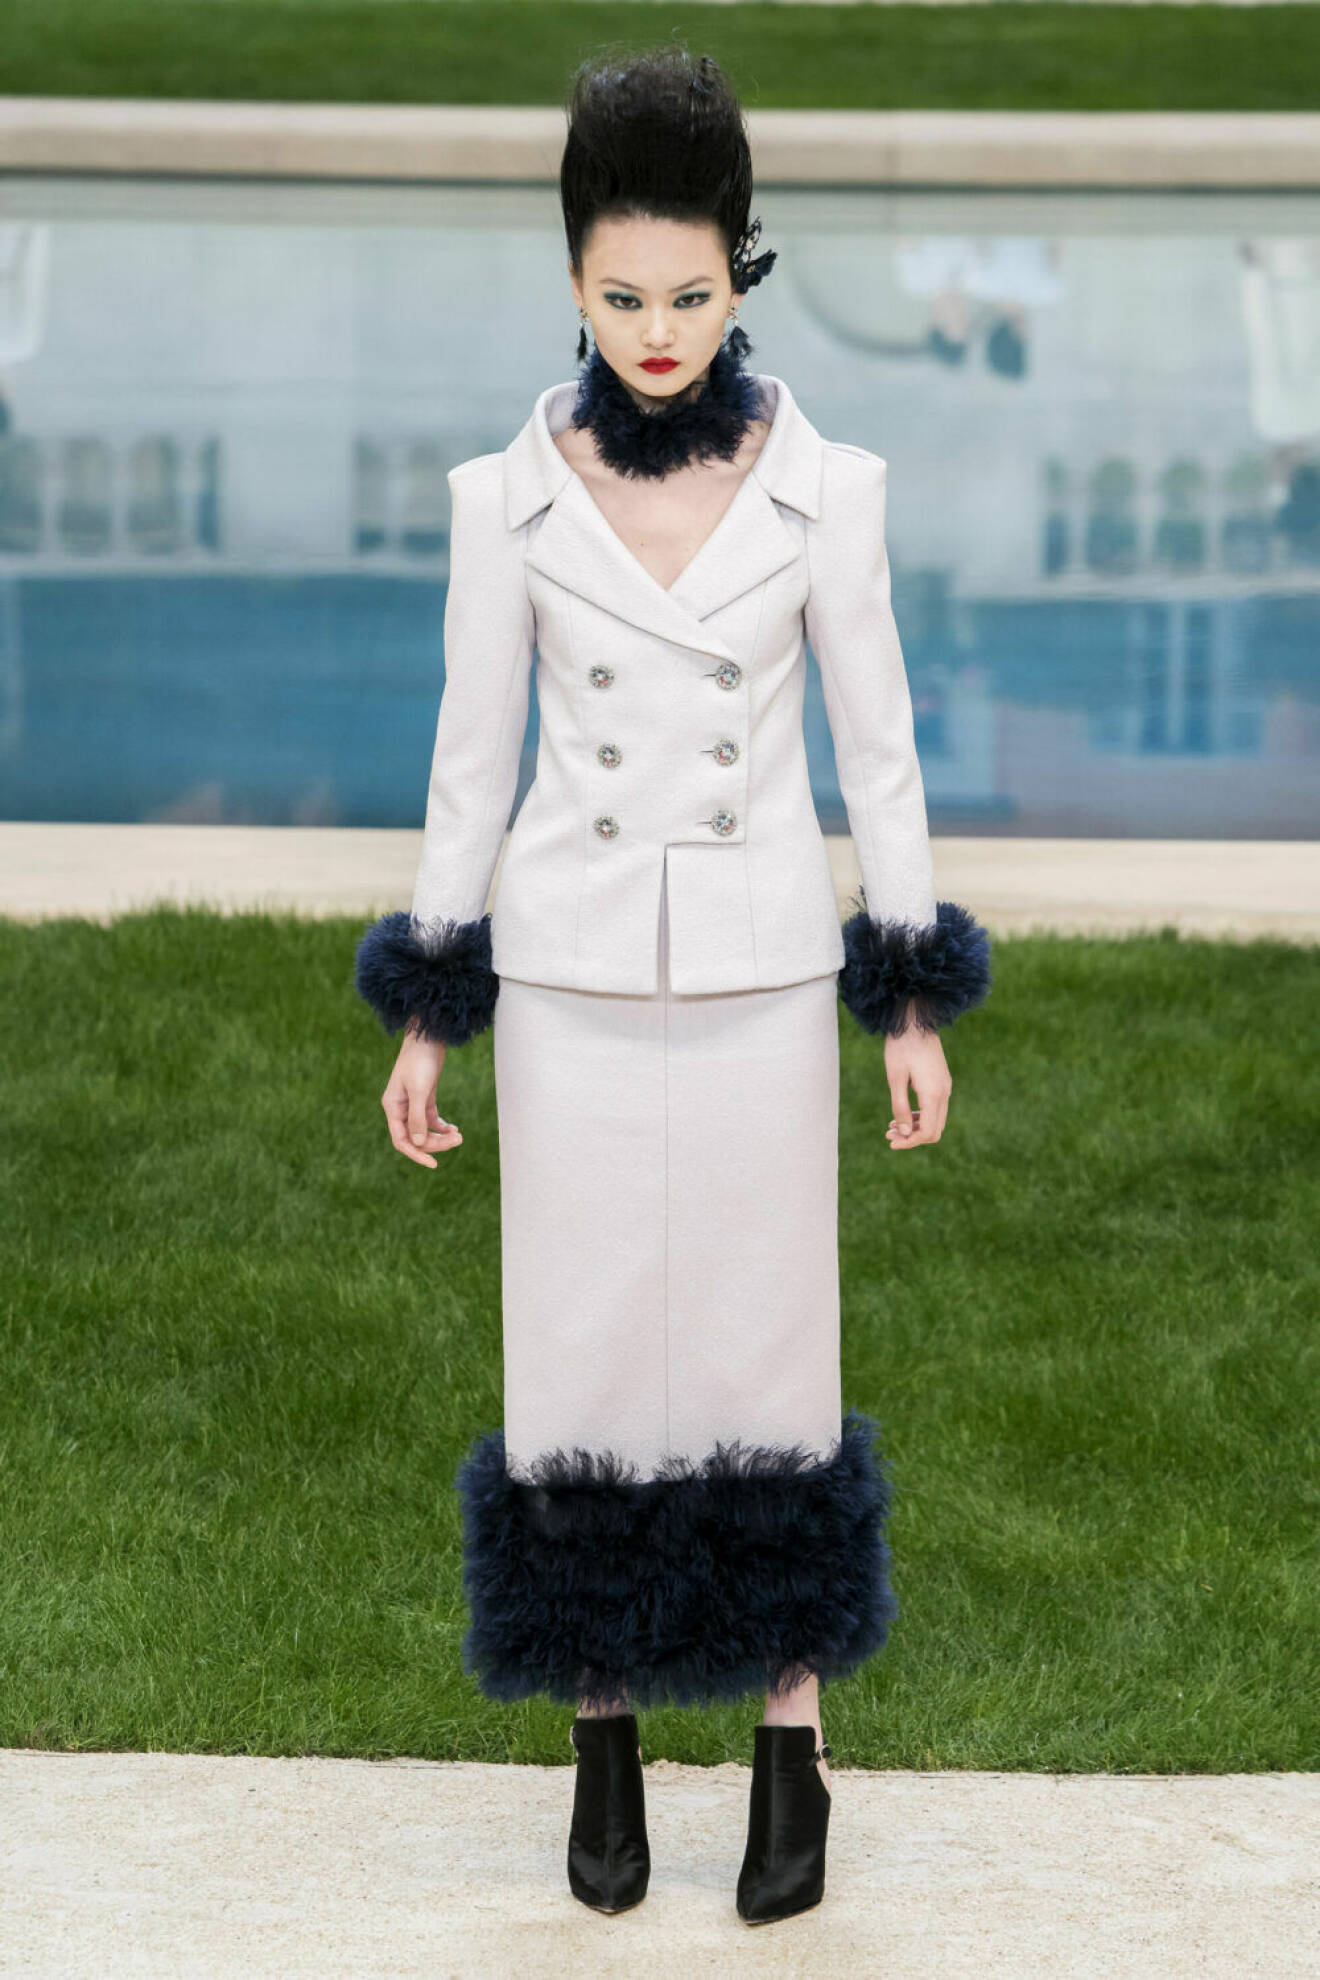 Chanel Haute Couture Paris, vit kostym med fjäder detaljer.